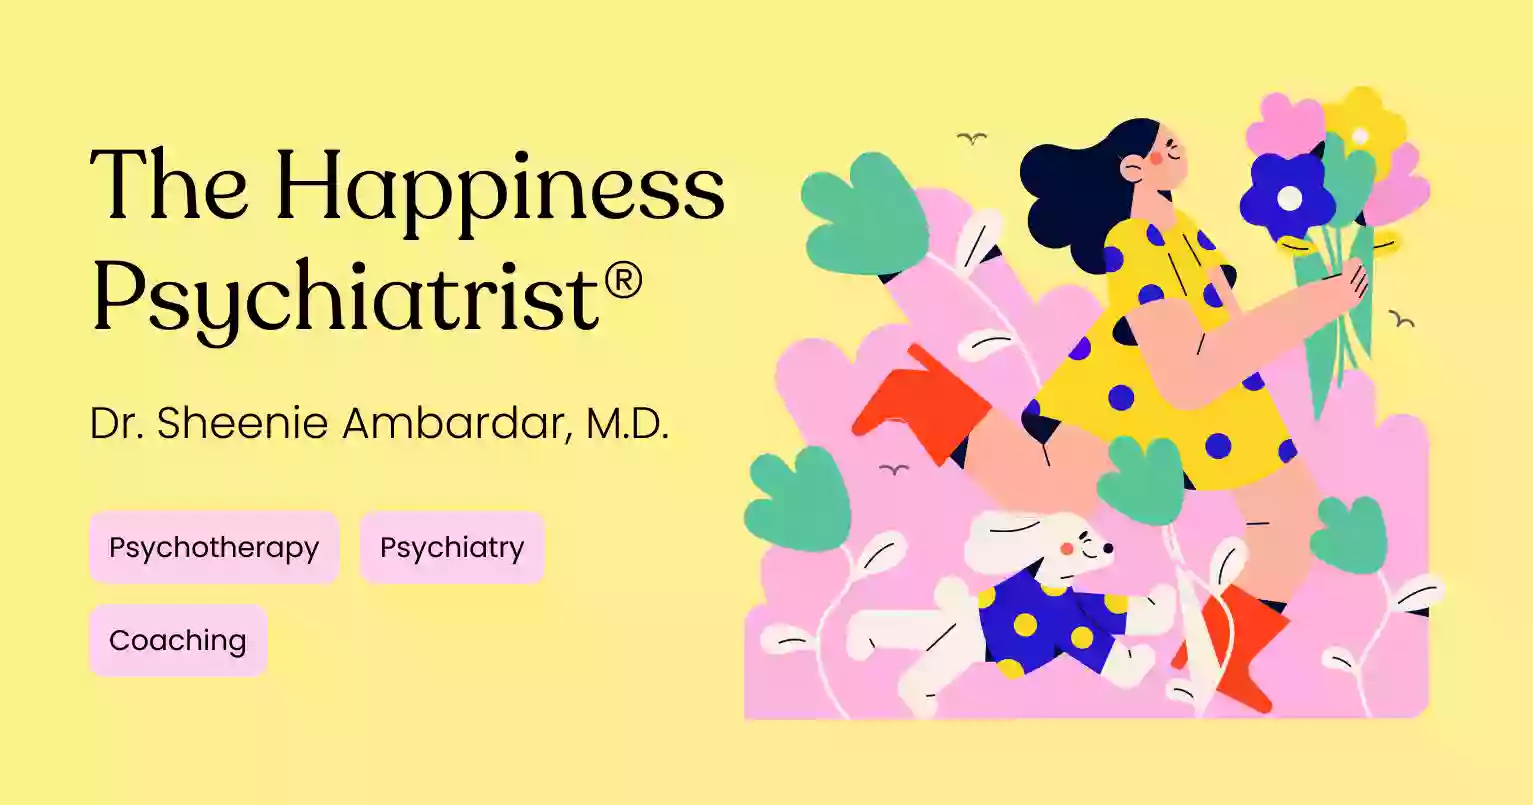 The Happiness Psychiatrist: Sheenie Ambardar, M.D.